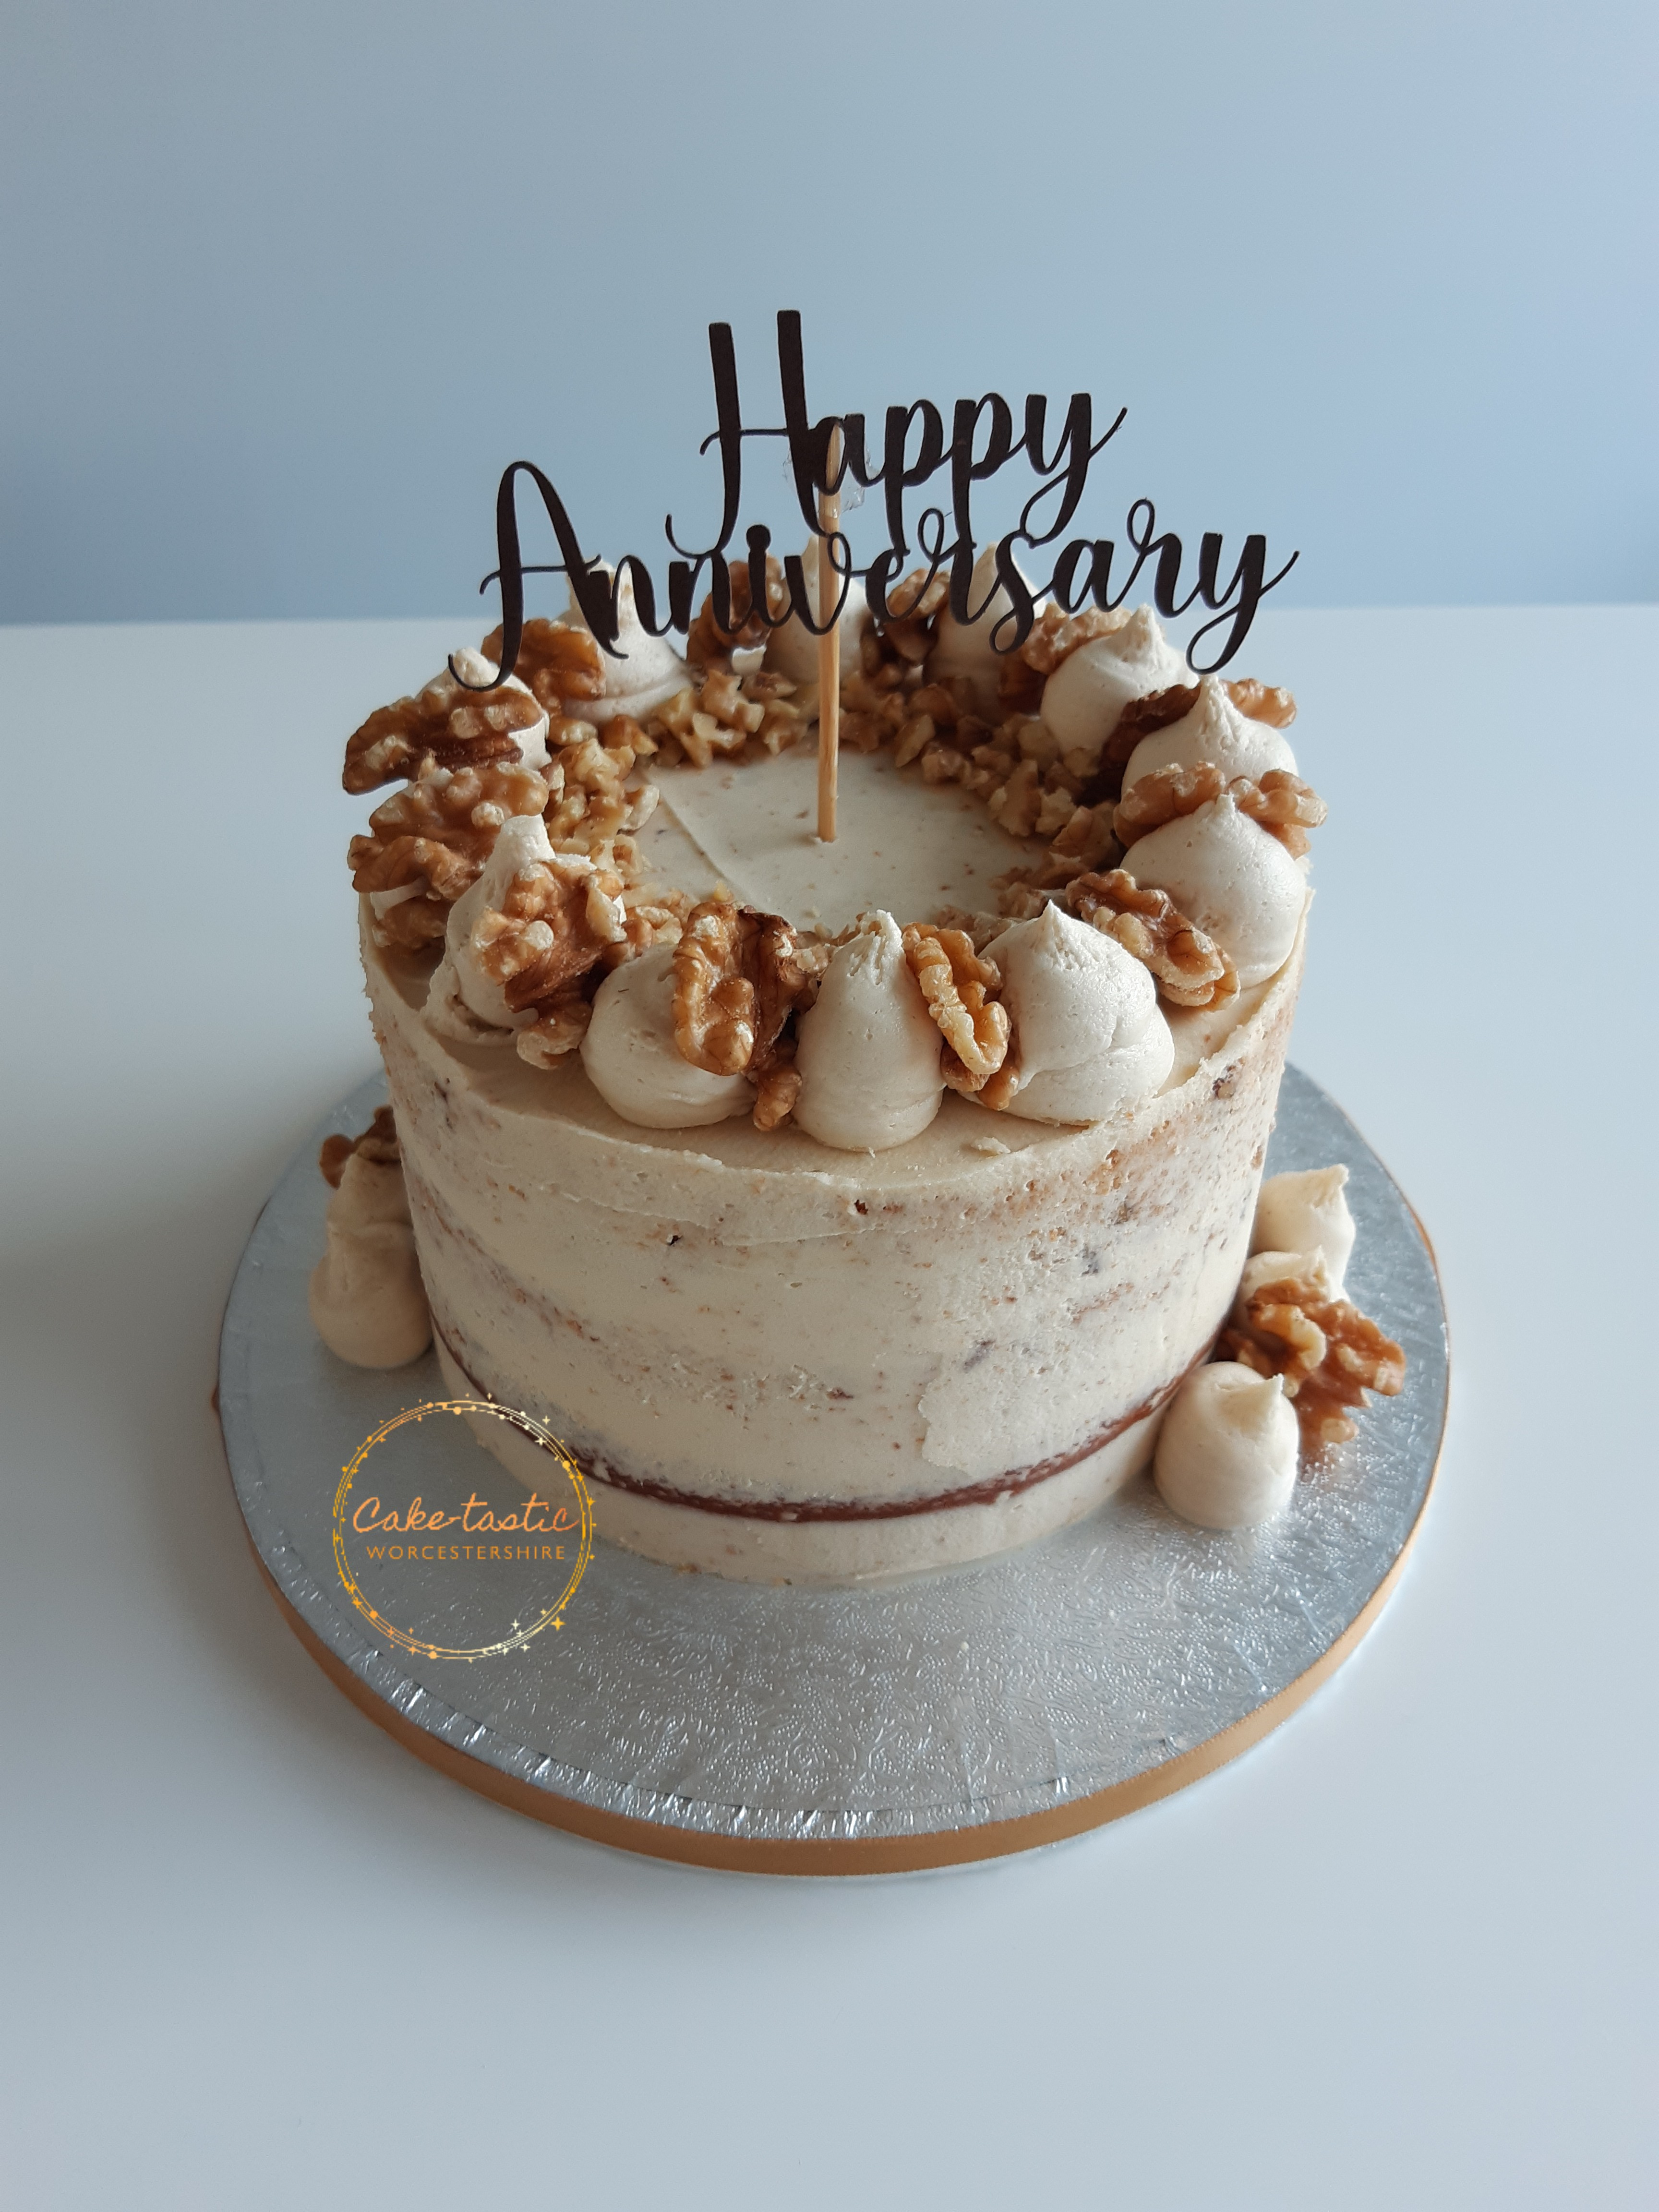 Wedding Anniversary Cake - Coffee & Walnut Cake